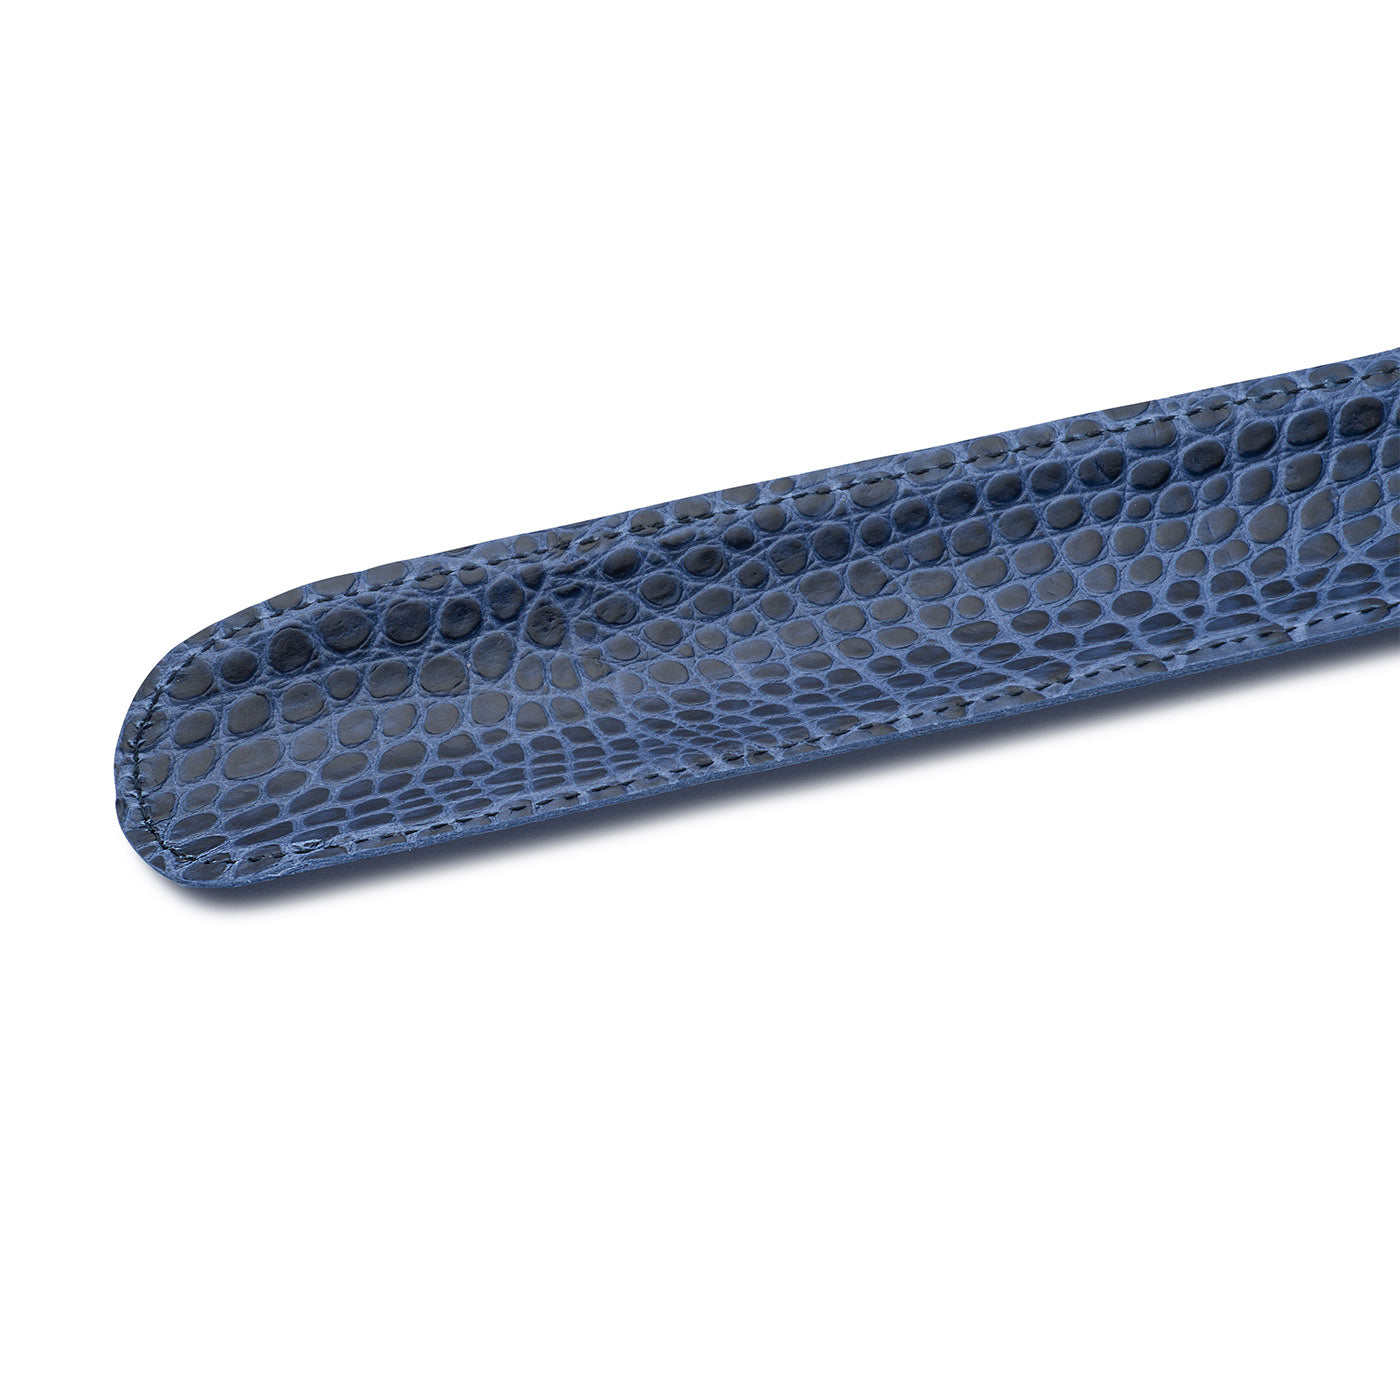 Cornet à chaussures en cuir simili-croc bleu - Vue alternative 2